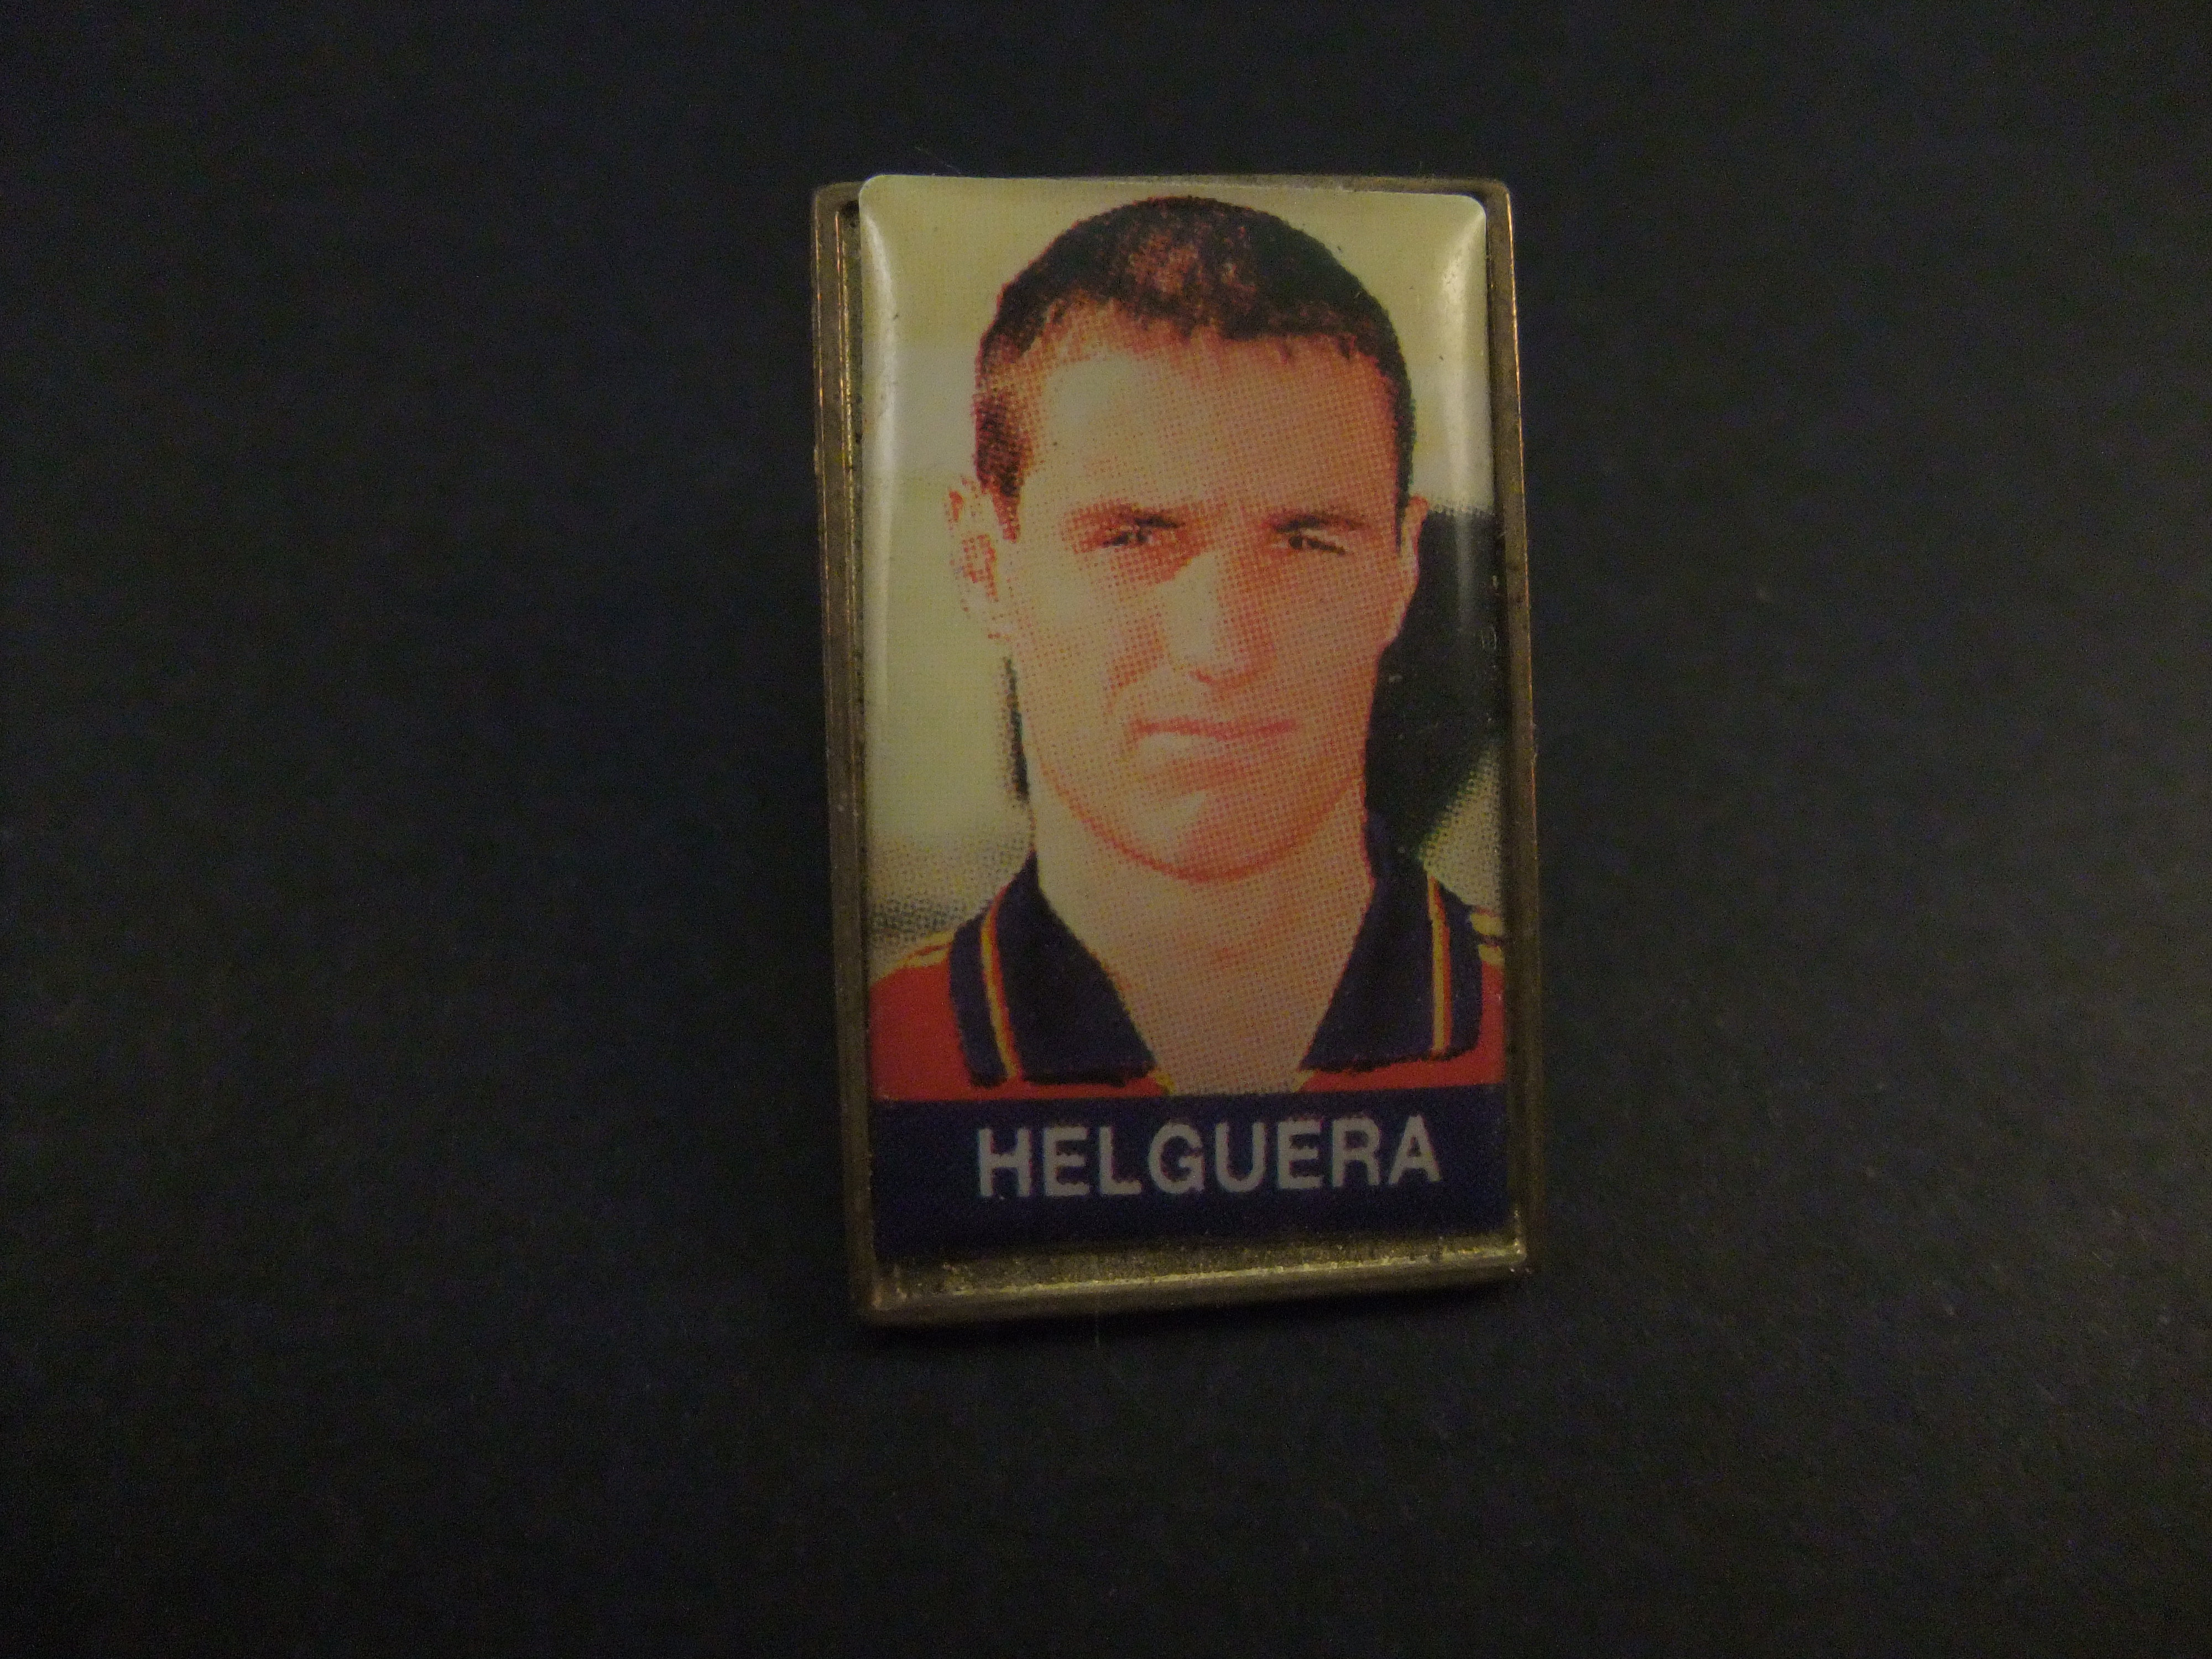 Iván Helguera Spaans voormalig voetballer.o.a. Real Madrid, Sevilla,AS Roma